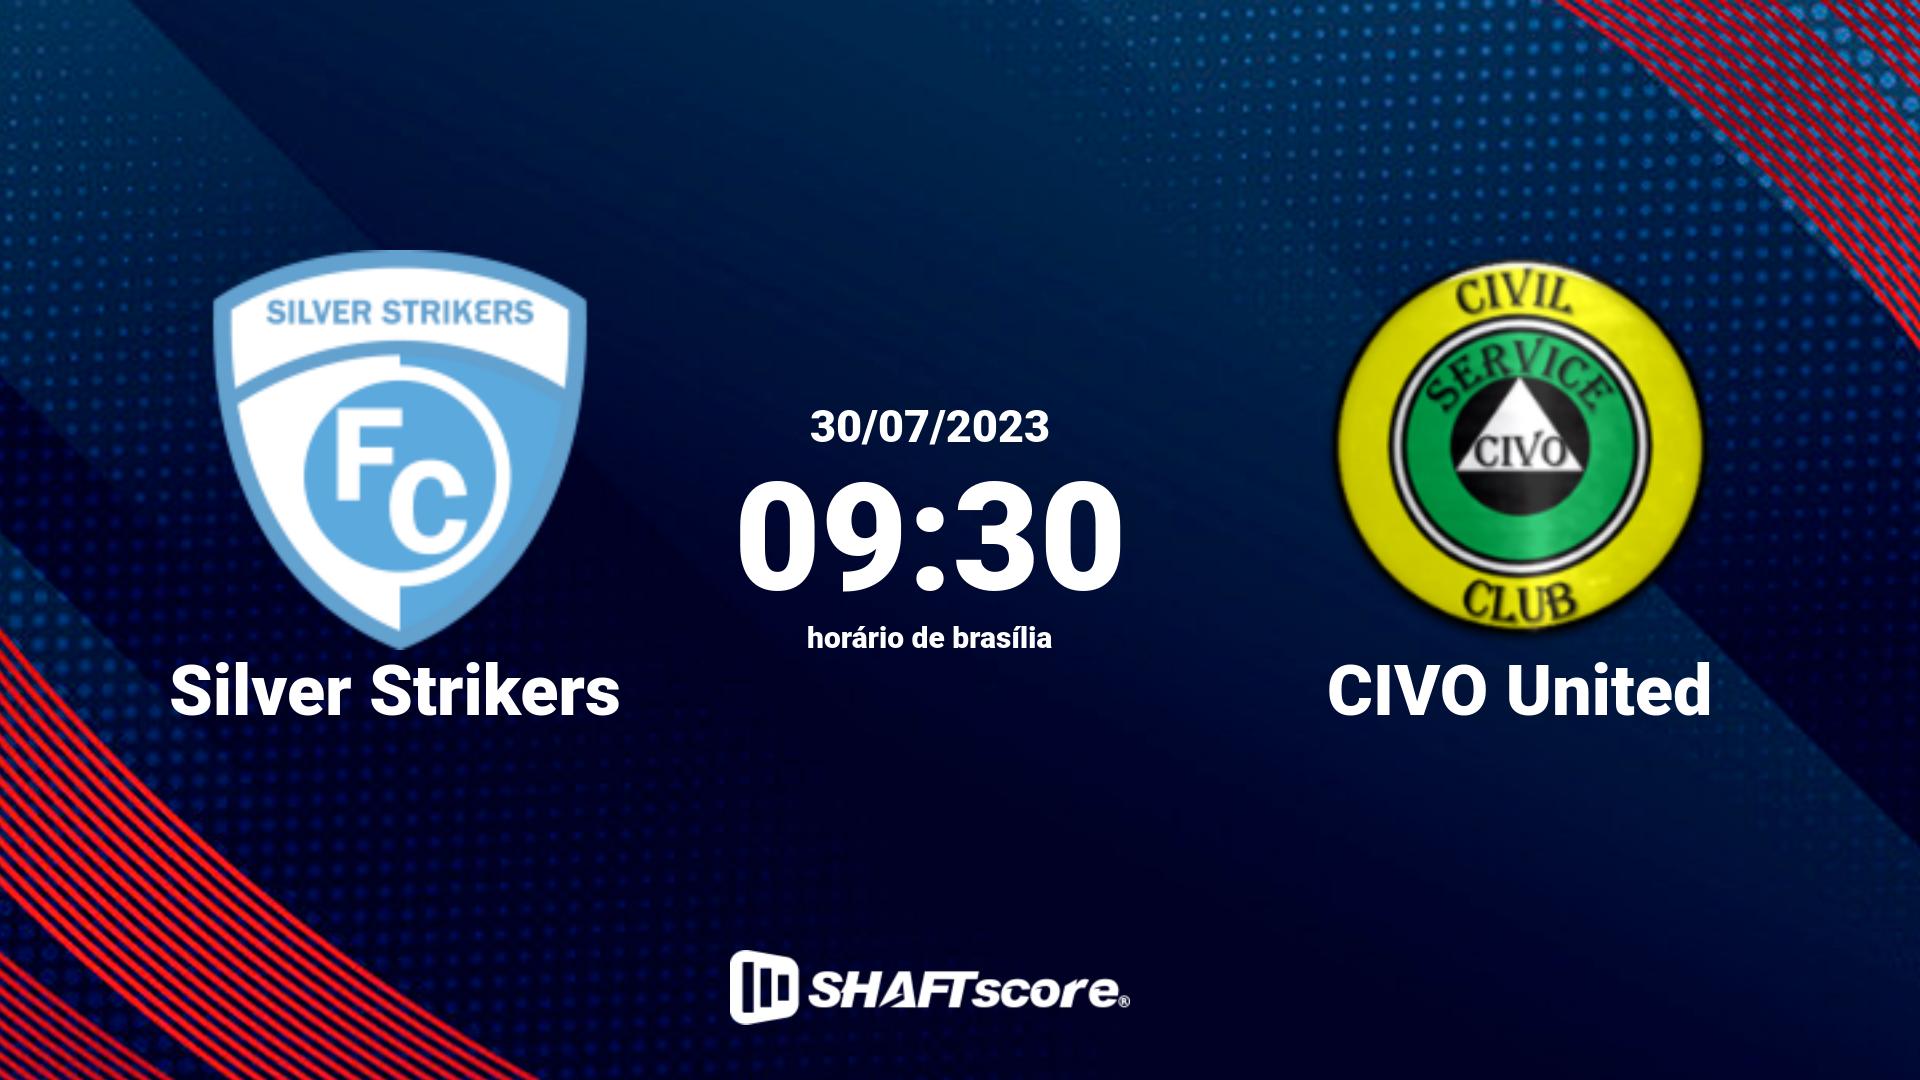 Estatísticas do jogo Silver Strikers vs CIVO United 30.07 09:30